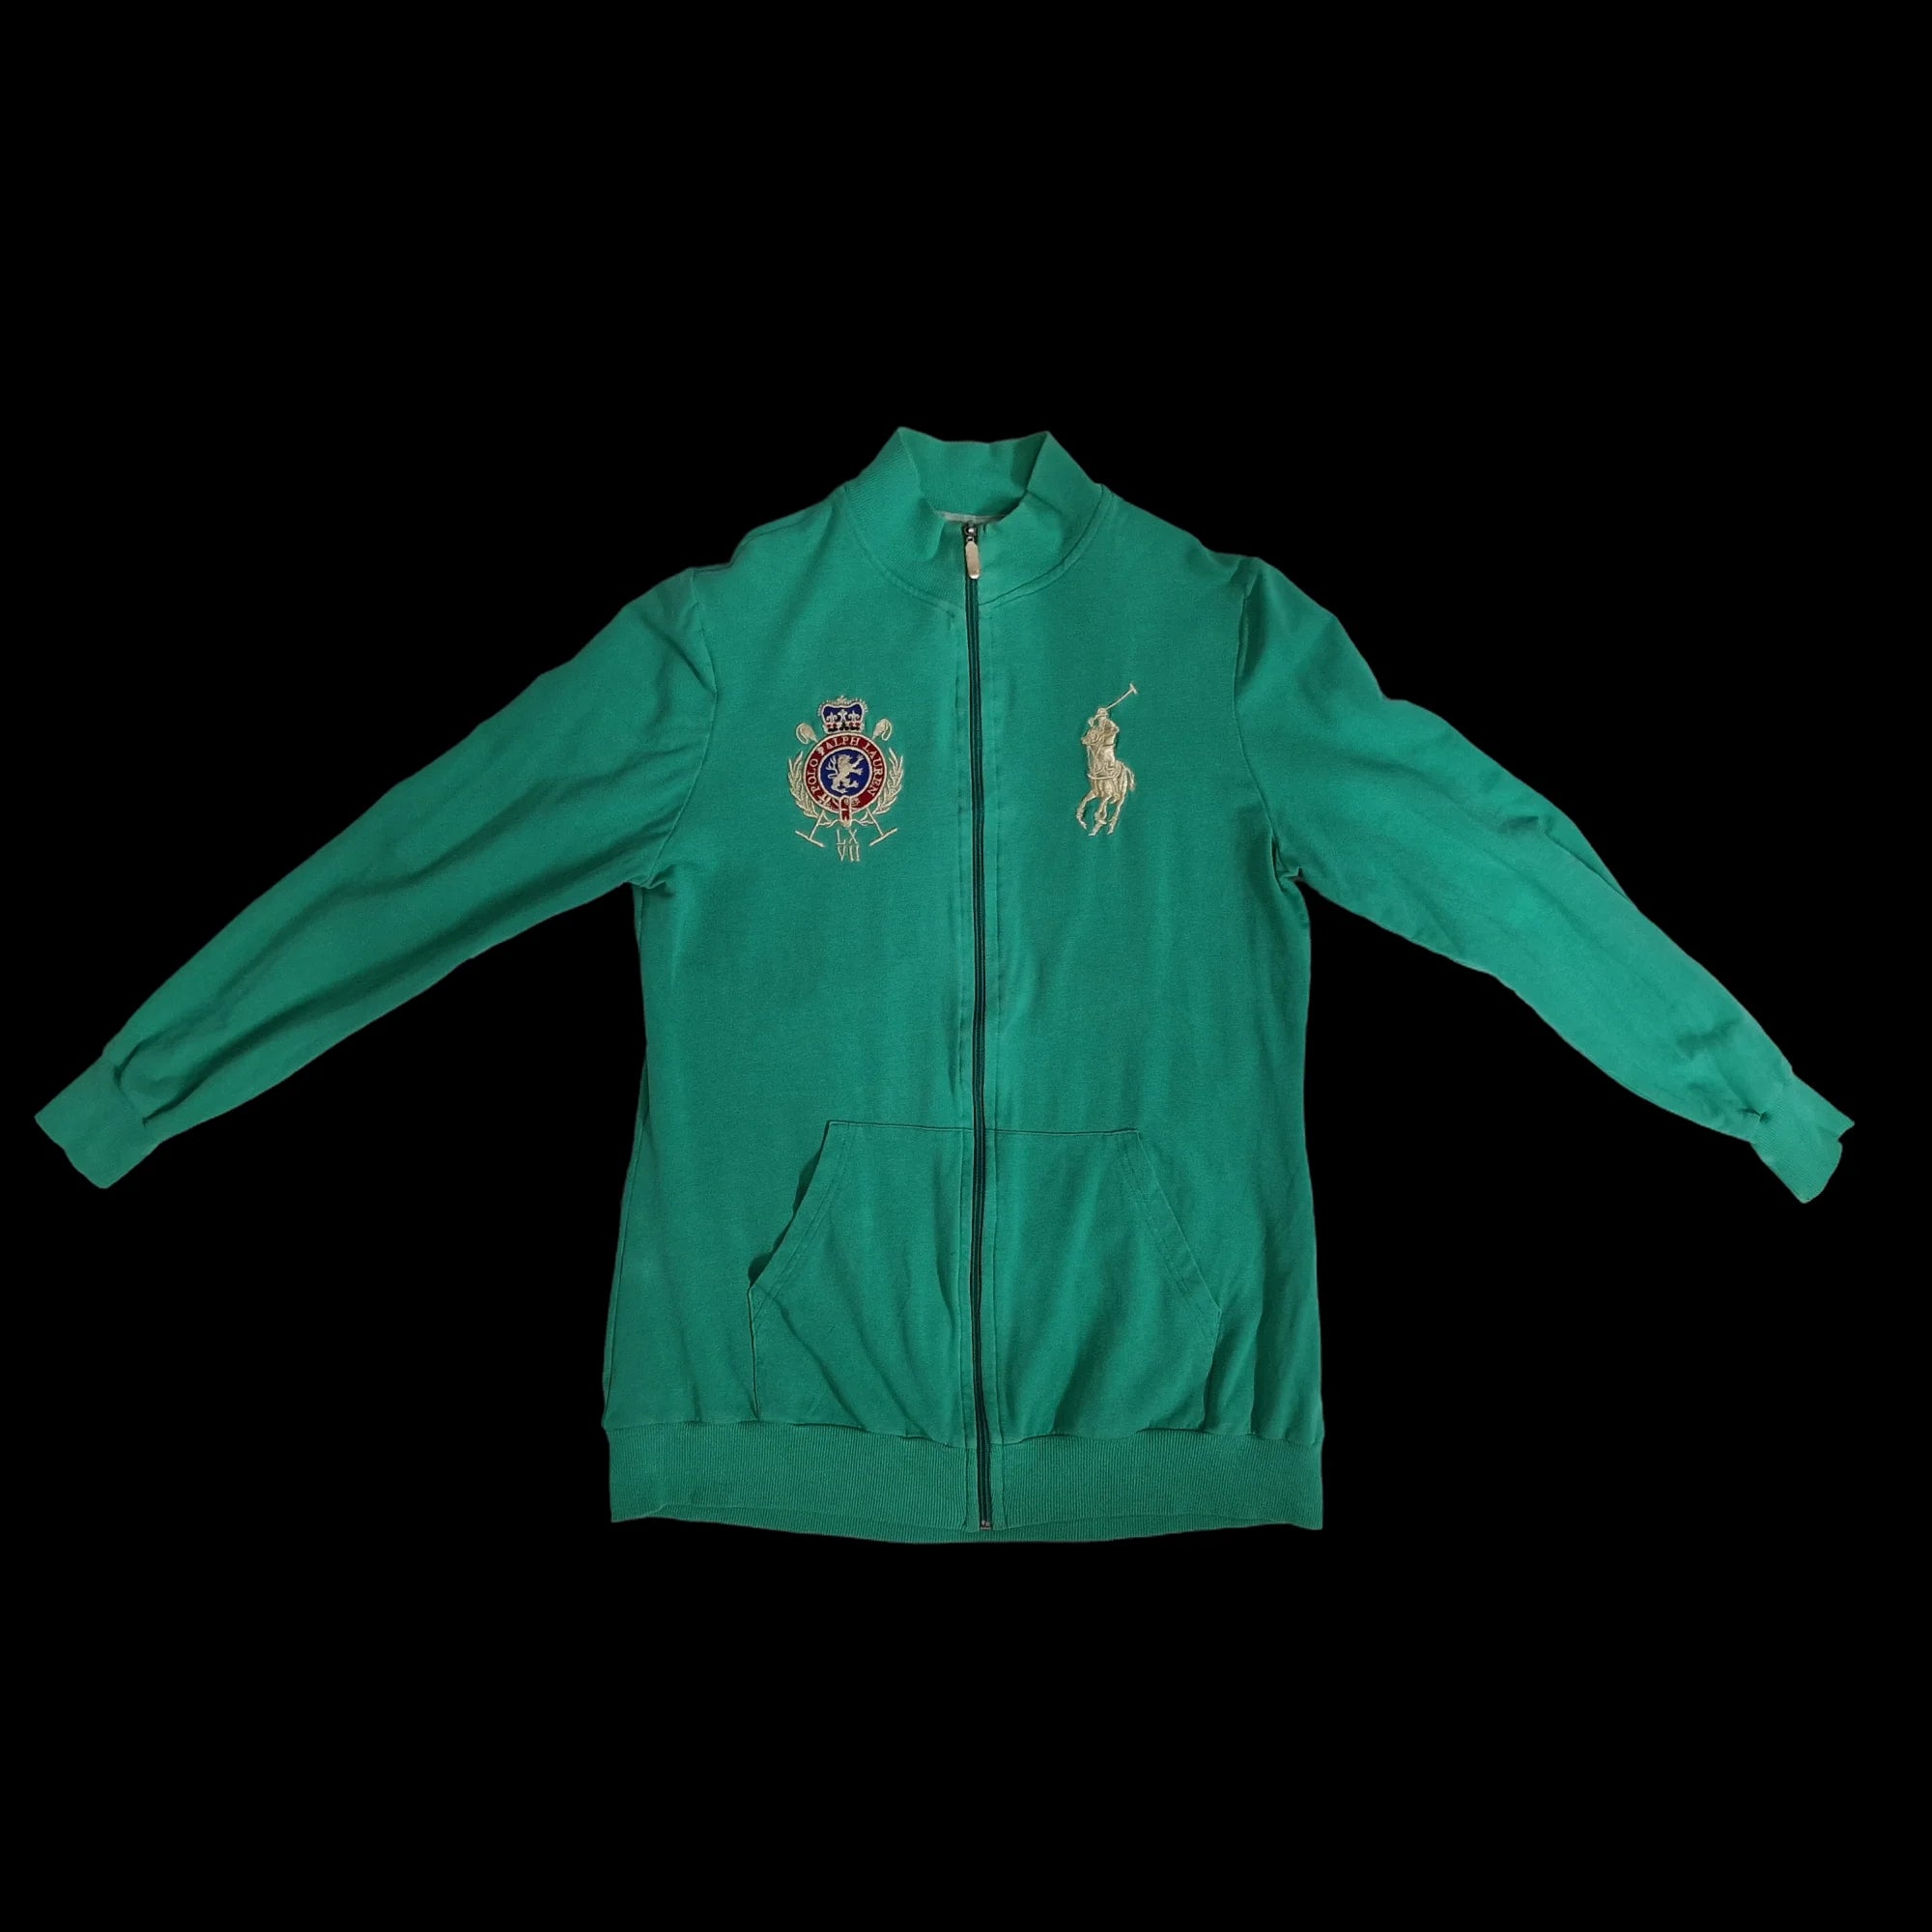 Ralph Lauren Polo Unisex Green Jacket UK XL Vintage - Coat